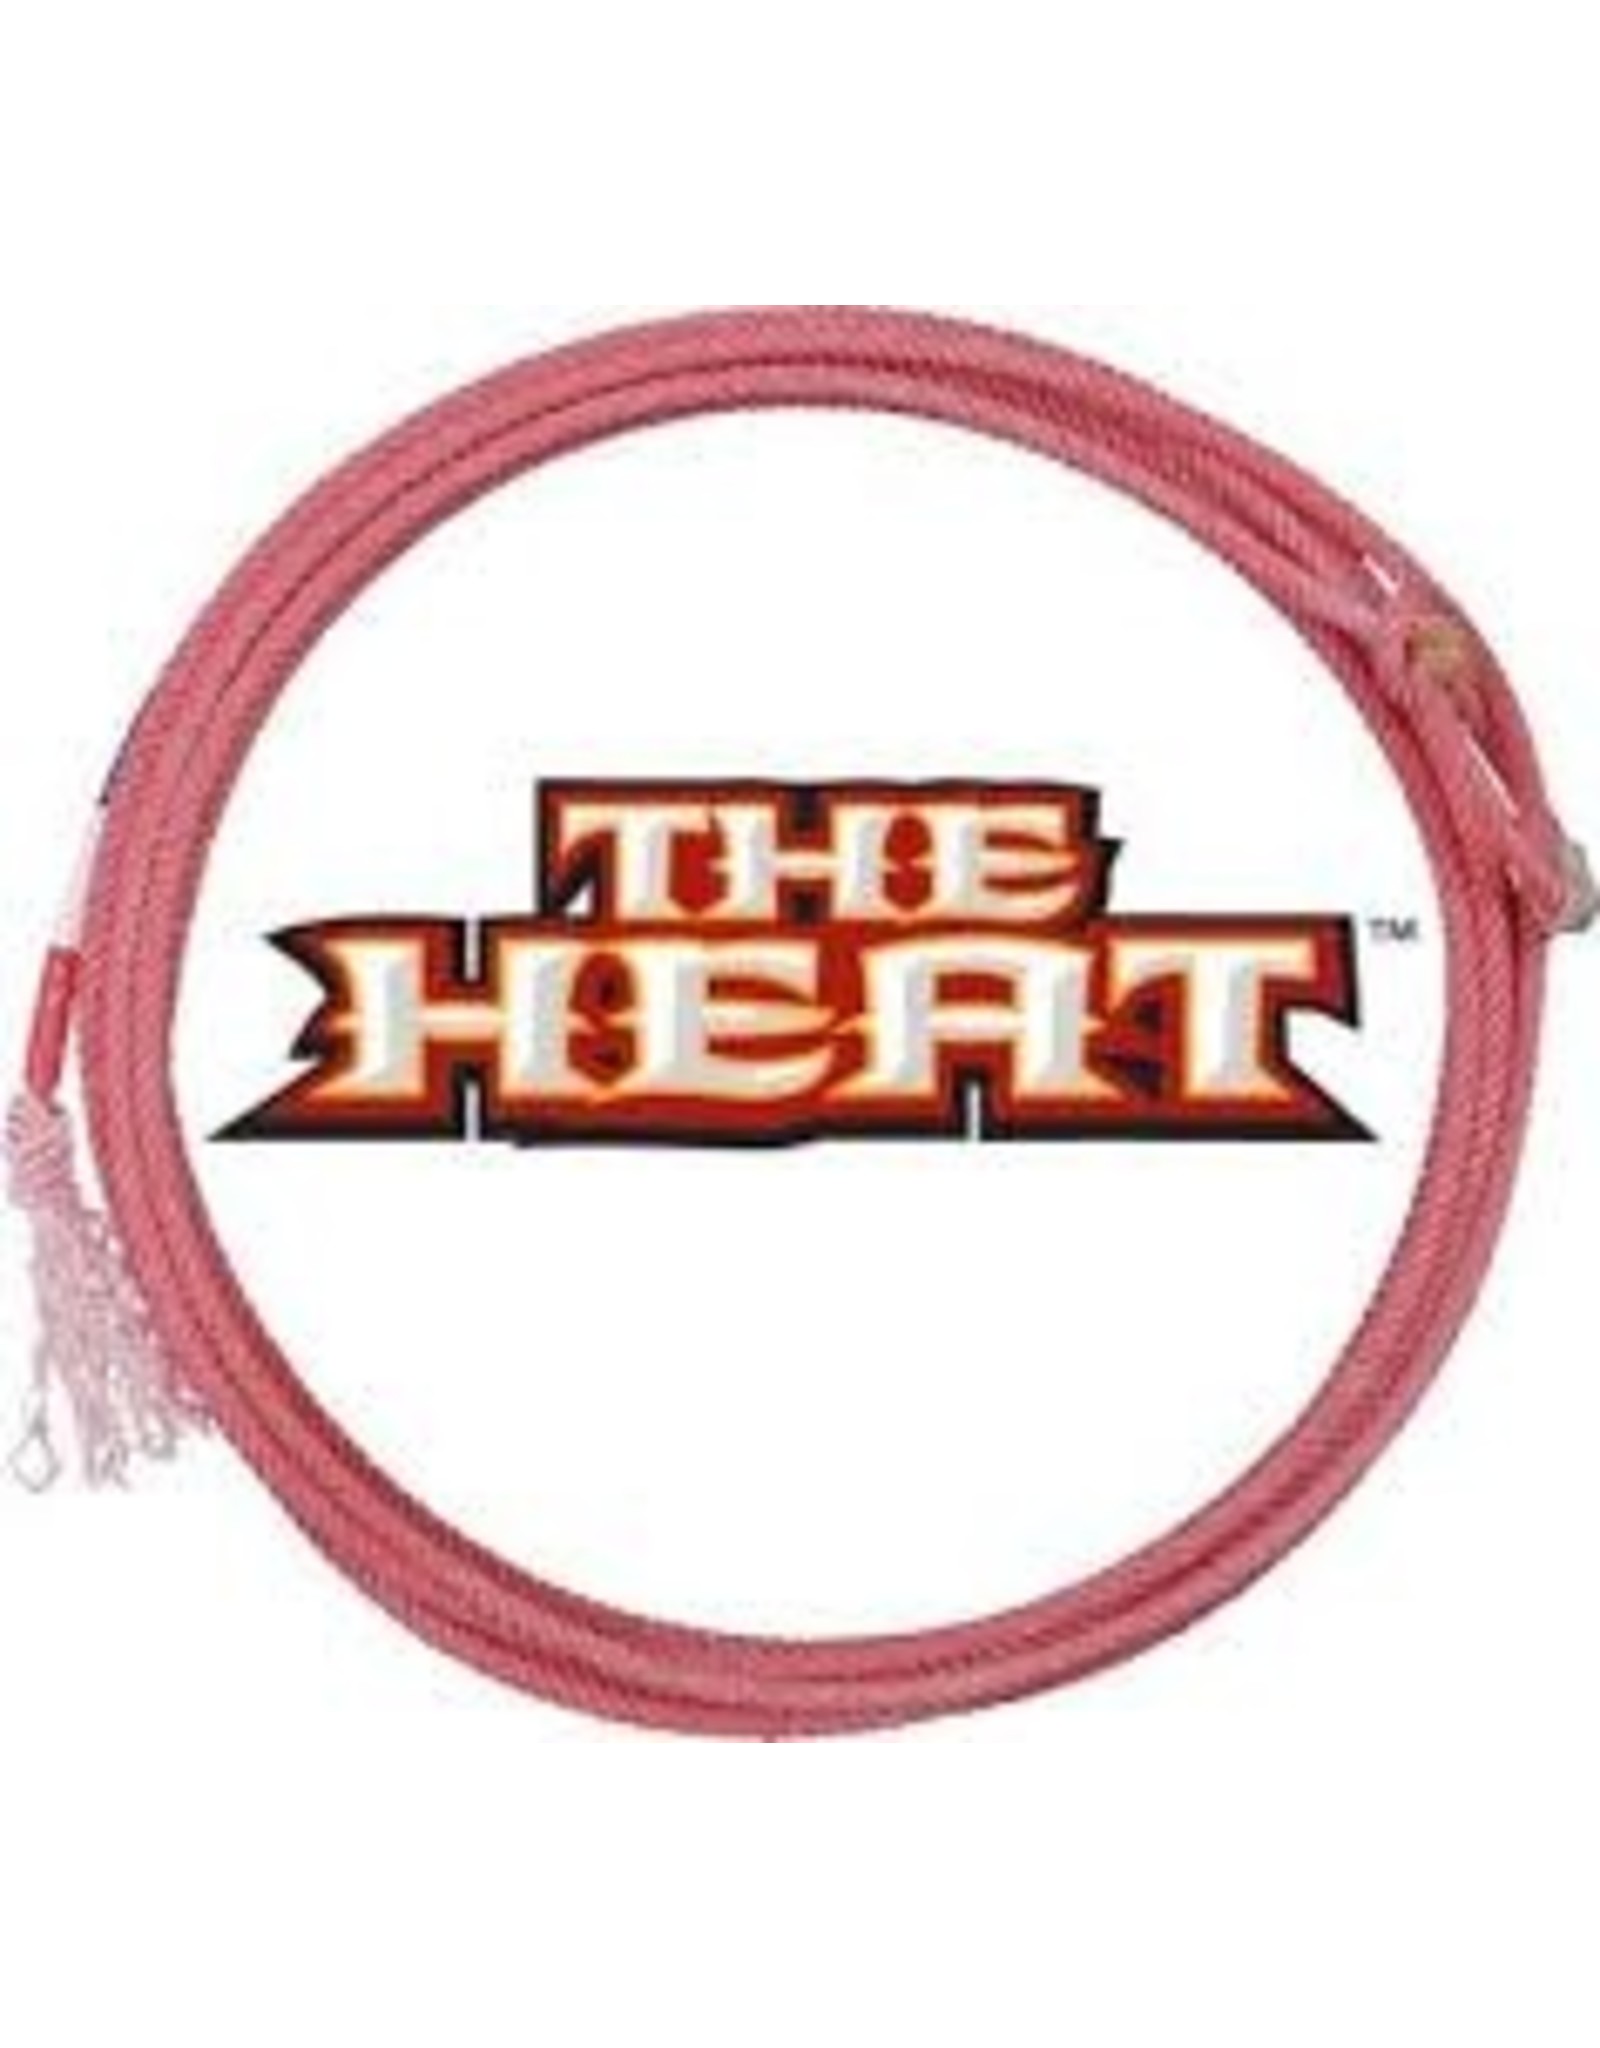 Rope - CLASSIC -Heat 35' -HM Heel